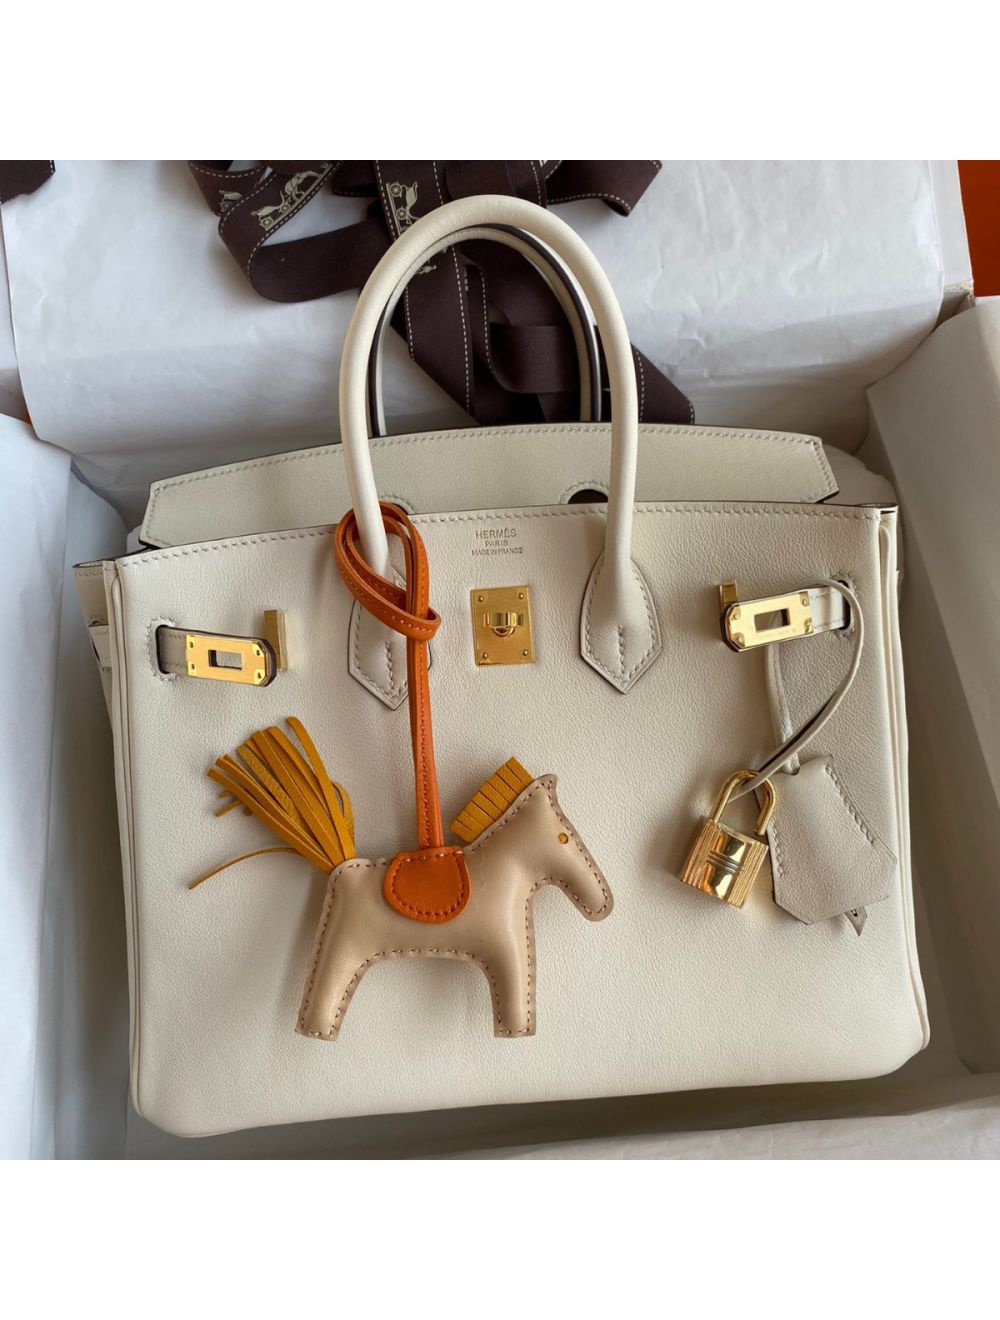 Hermes Birkin 25 cm Handbag in Nata Epsom Leather